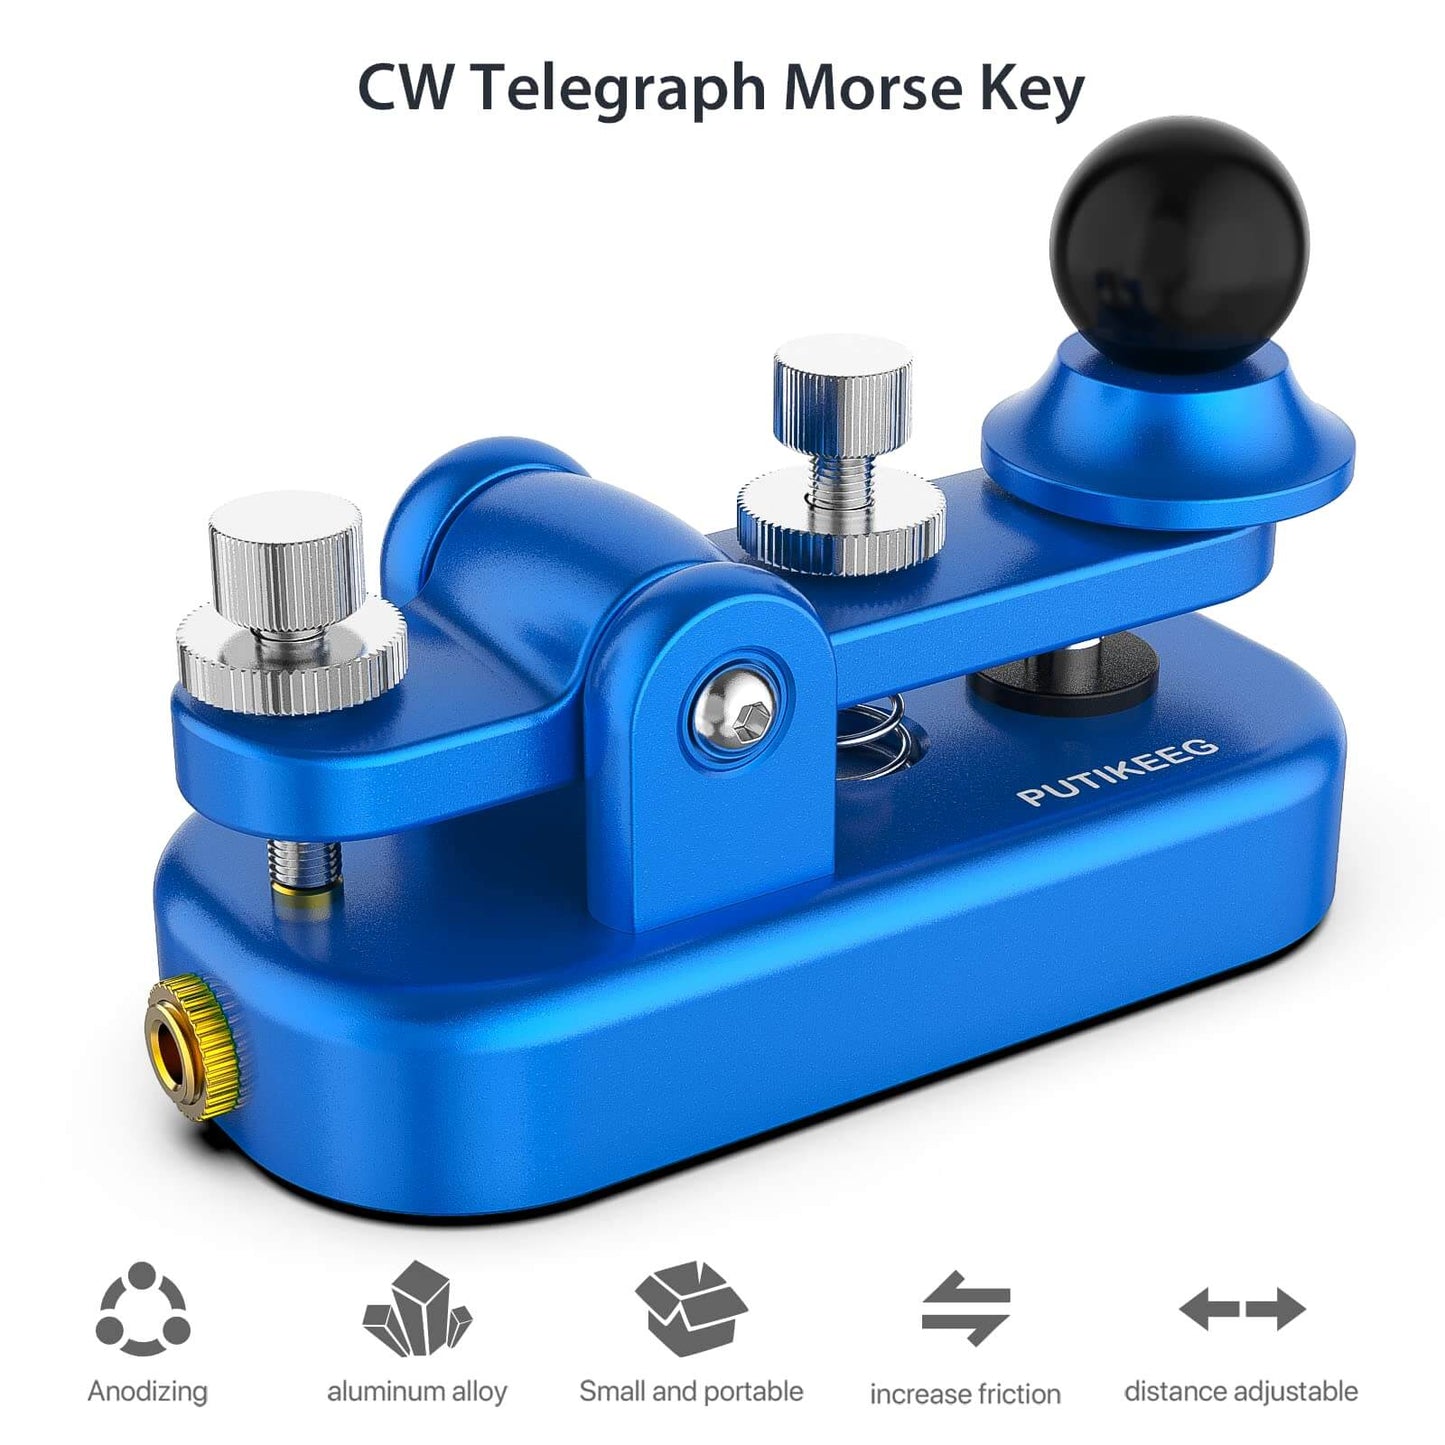 Mini CW  Morse Key